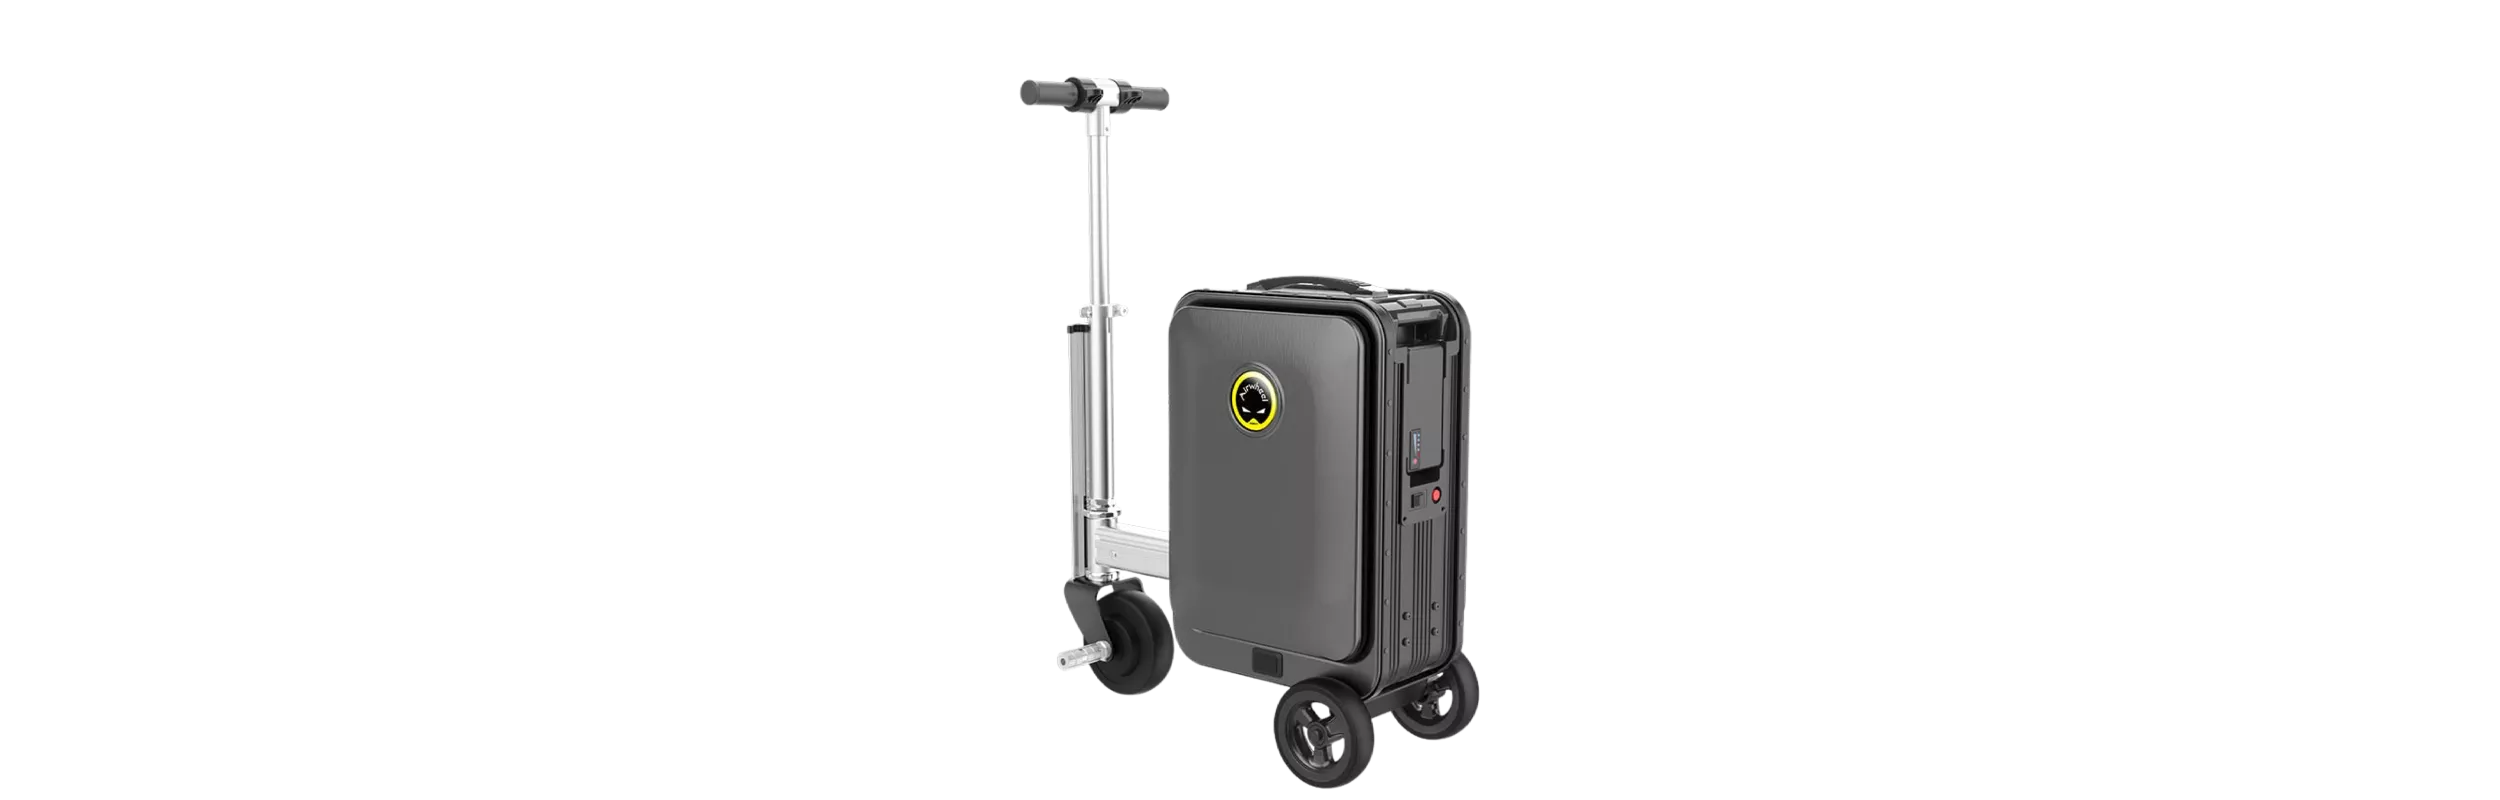 airwheel se3s black color smart luggage in front of transparent background